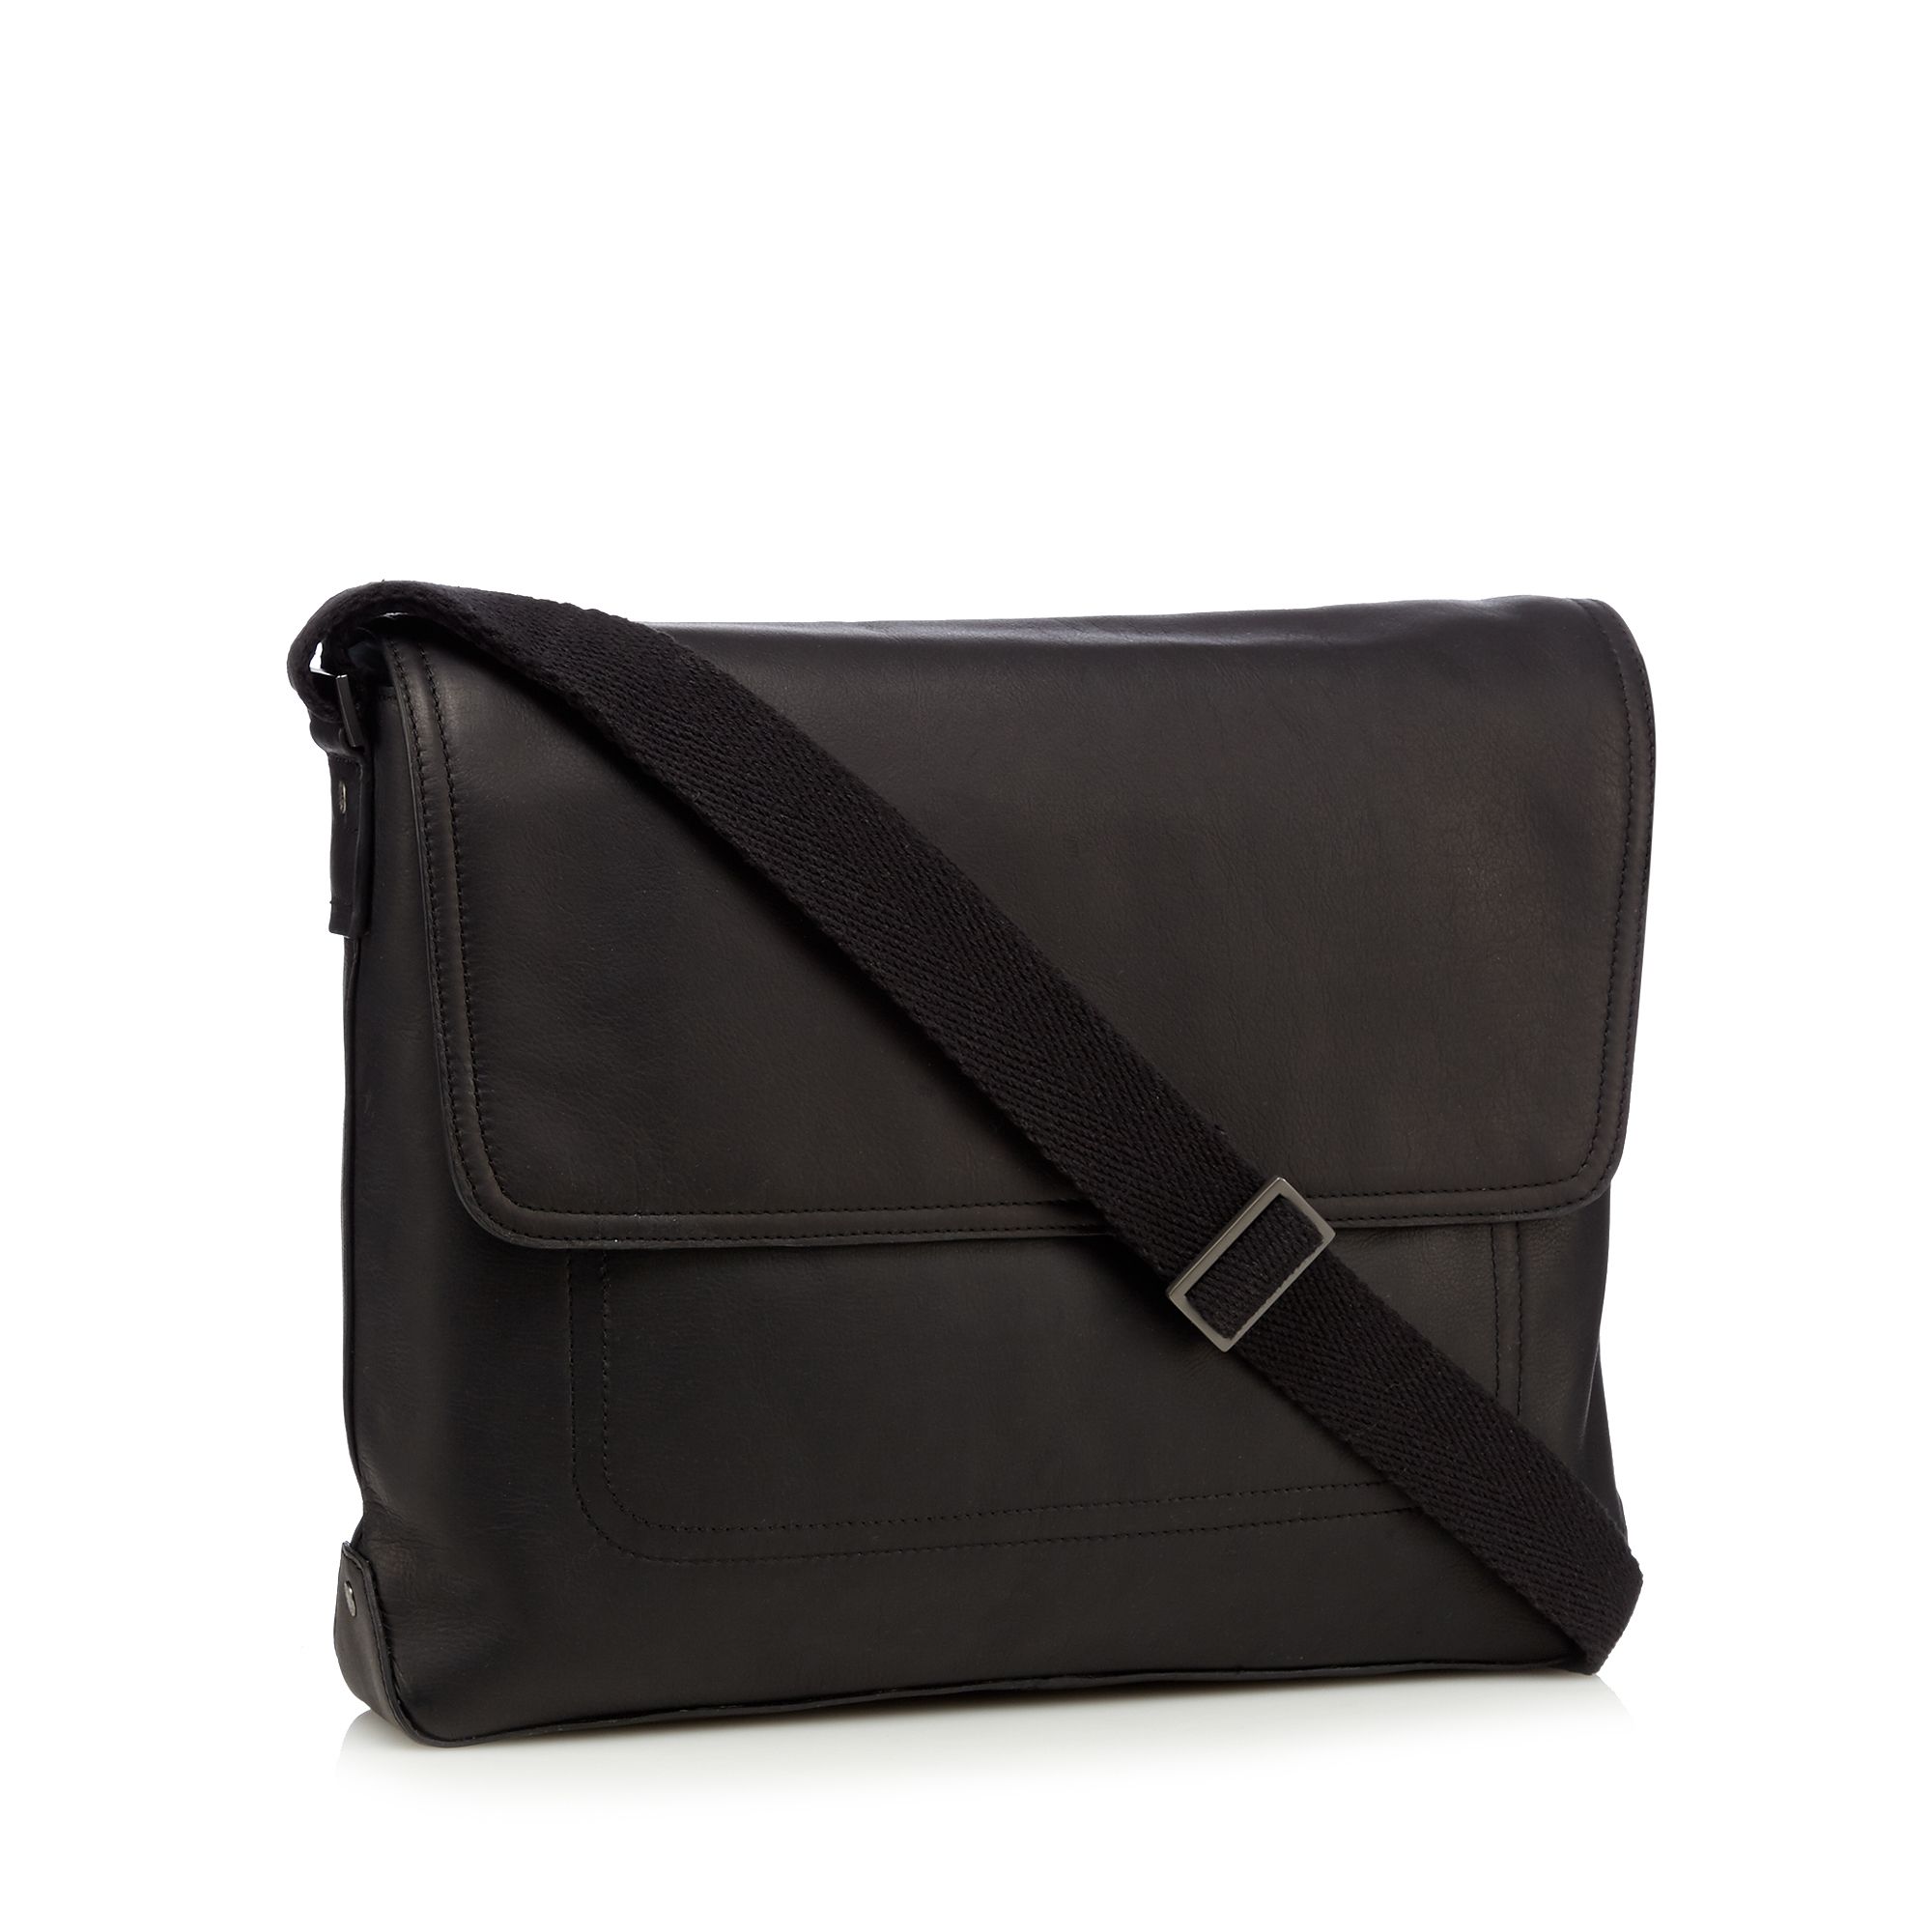 J By Jasper Conran Mens Designer Black Leather Despatch Bag From Debenhams